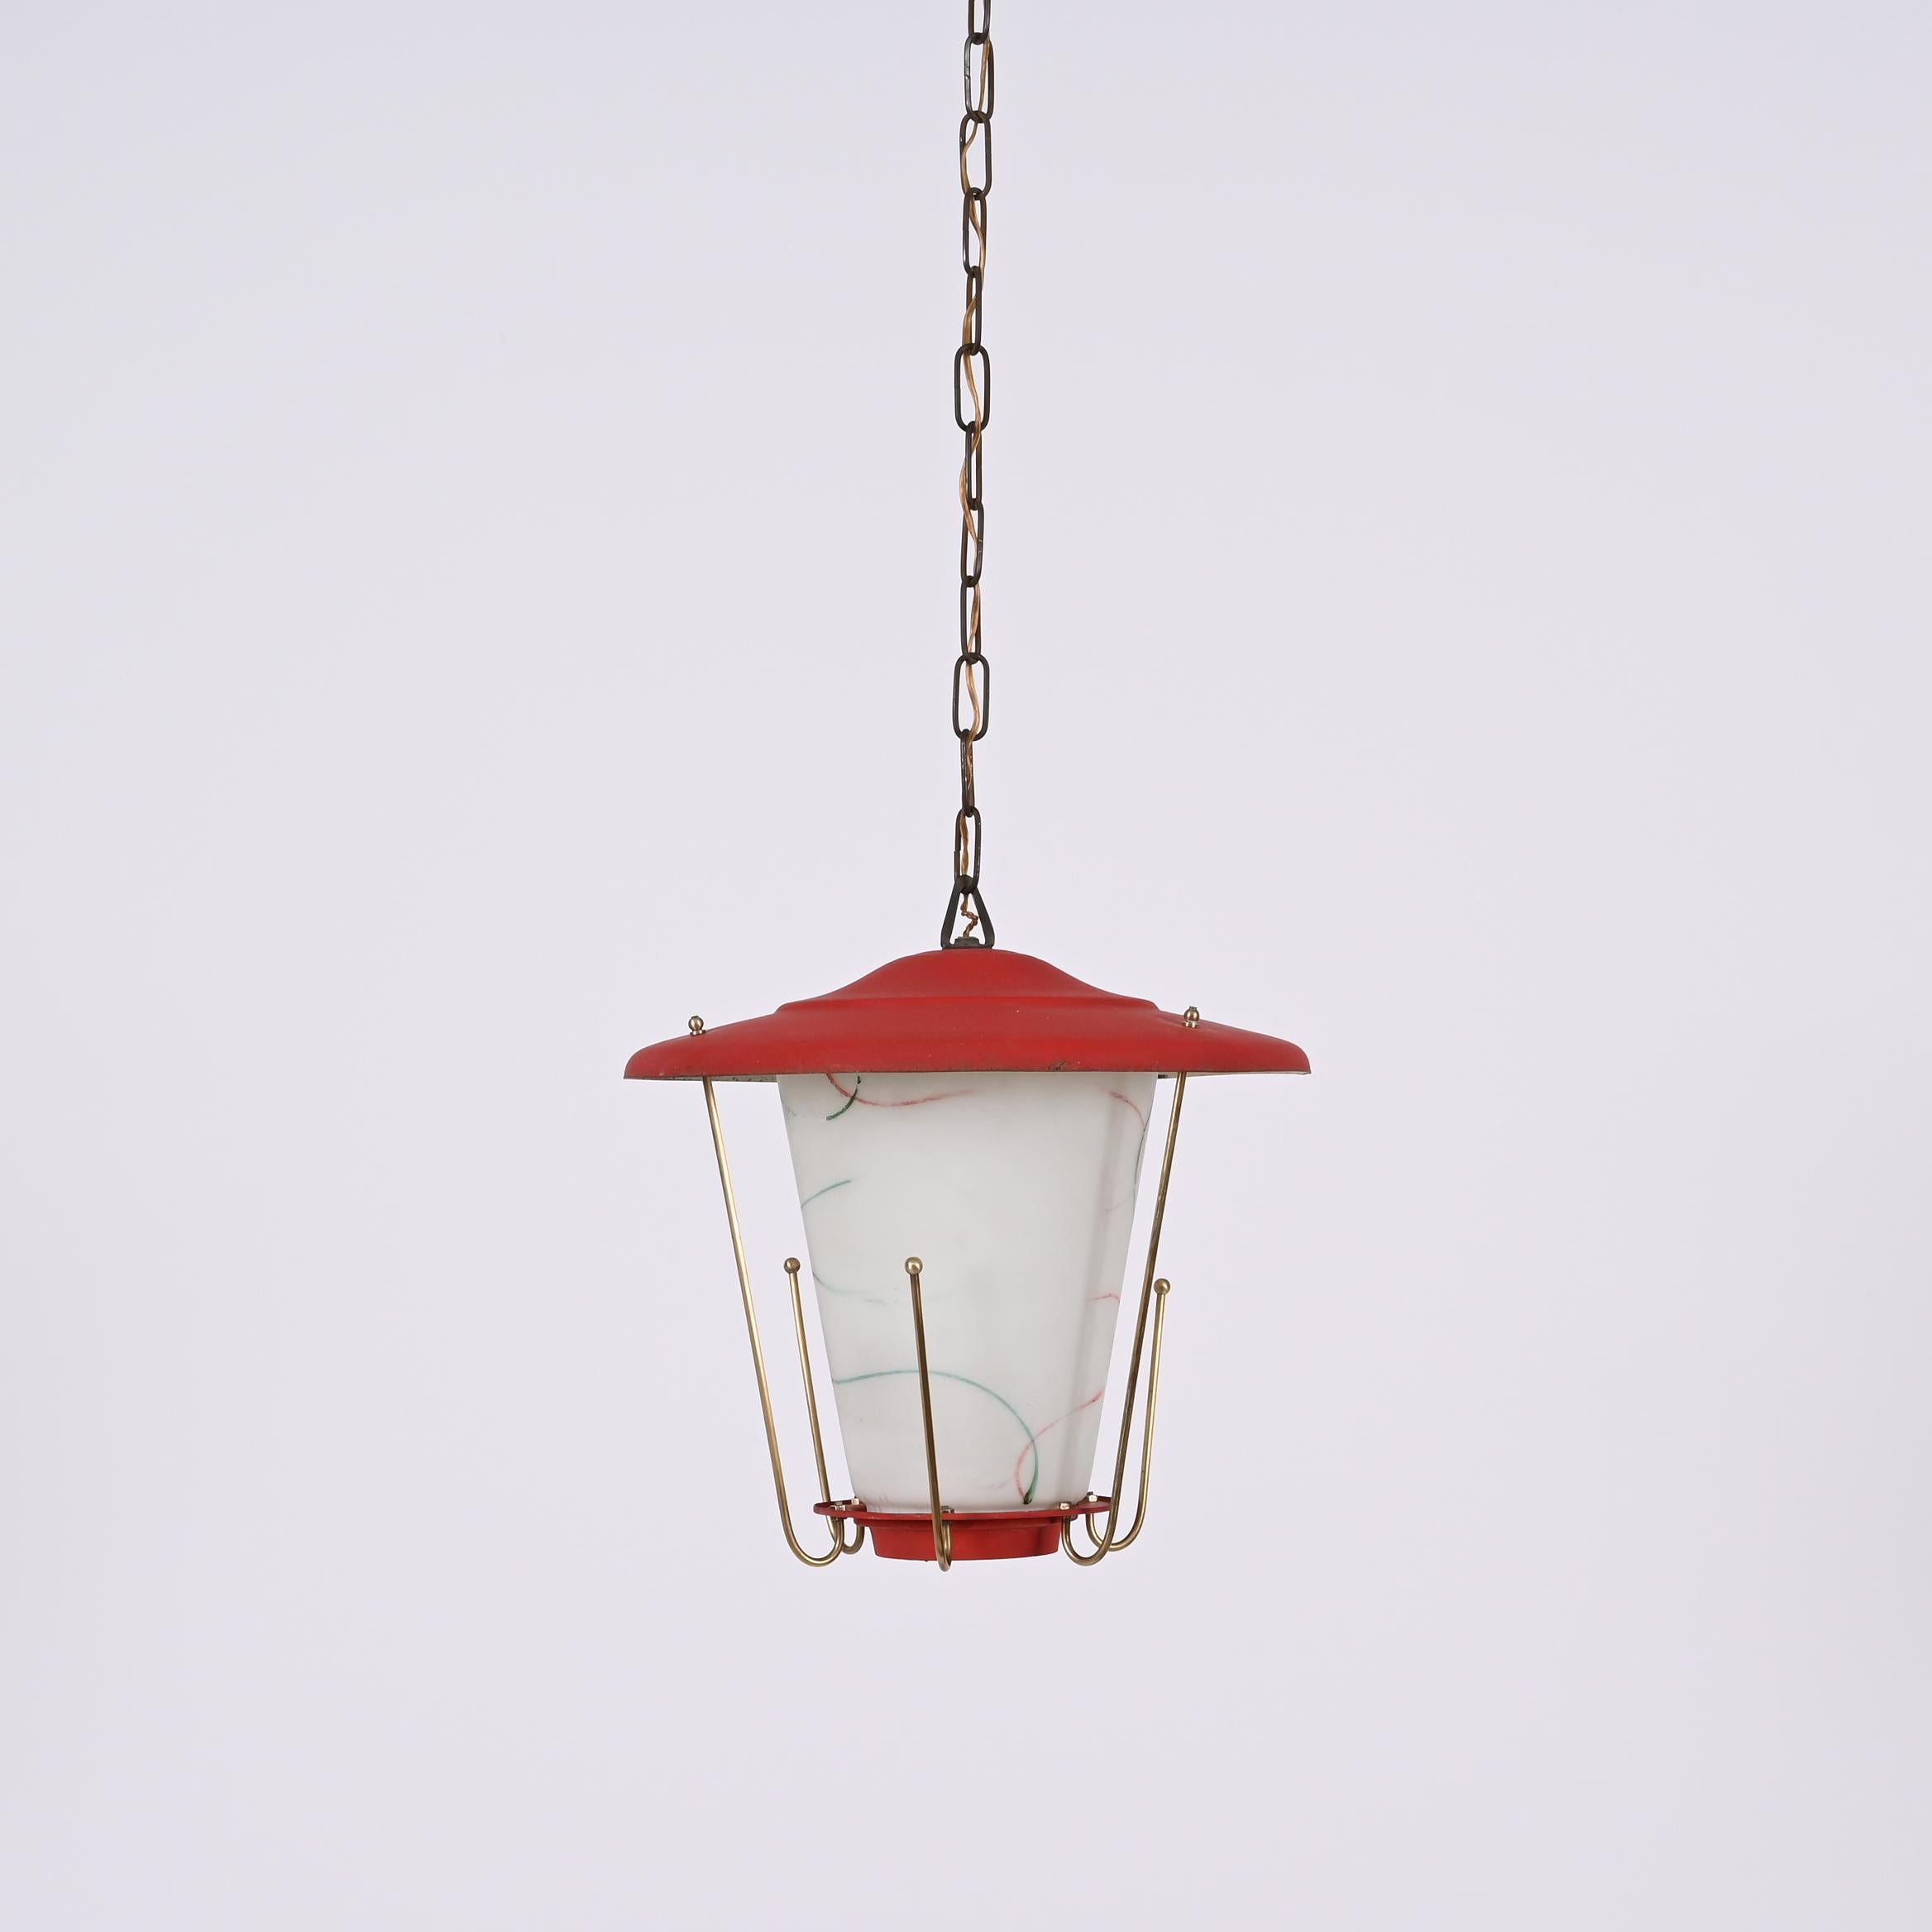 Midcentury Round Opaline Glass and Brass Italian Red Lantern Chandelier, 1950s For Sale 1